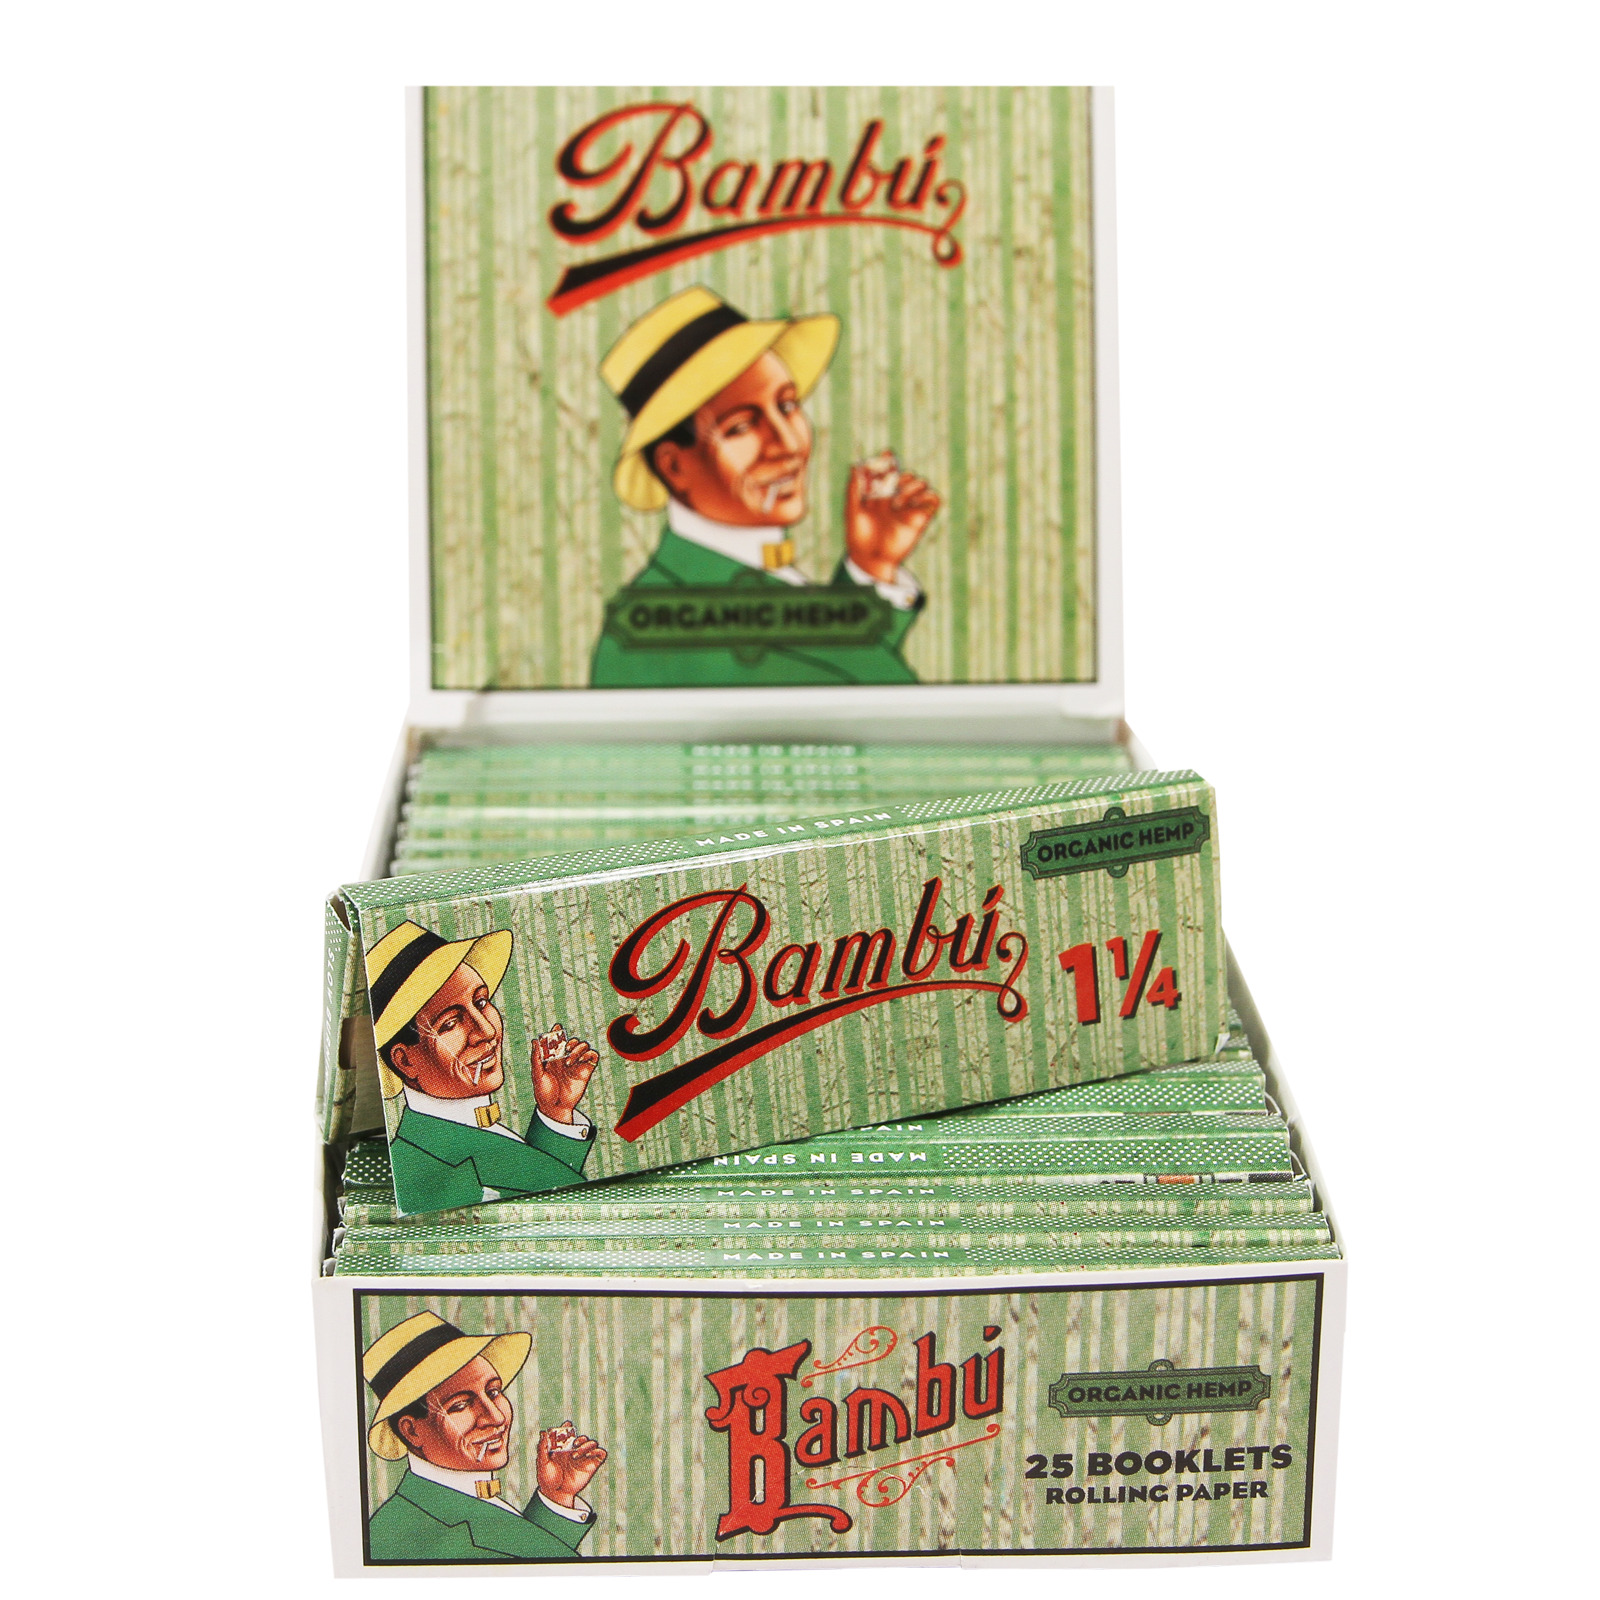 Full Sealed Box of Bambu Organic Hemp Cigarette Rolling Papers 1 1/4 /25 Booklet